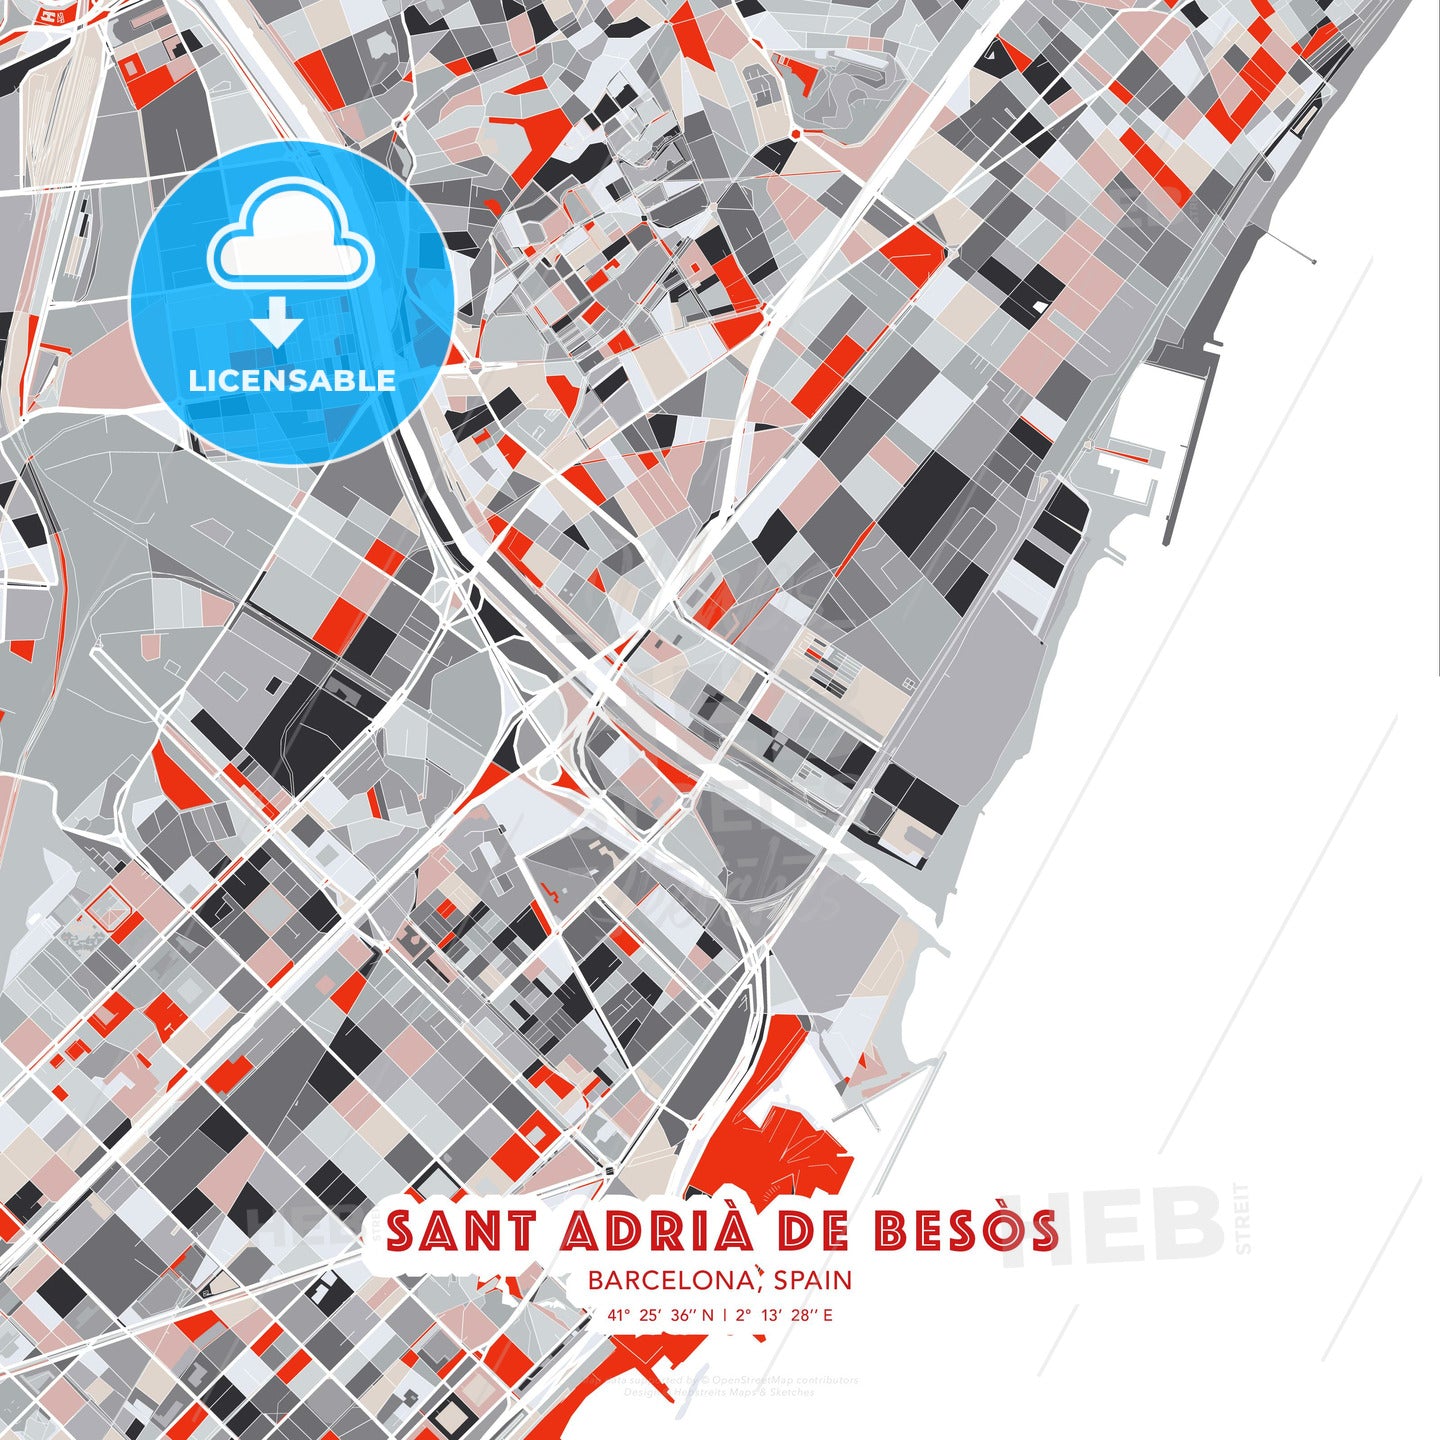 Sant Adrià de Besòs, Barcelona, Spain, modern map - HEBSTREITS Sketches